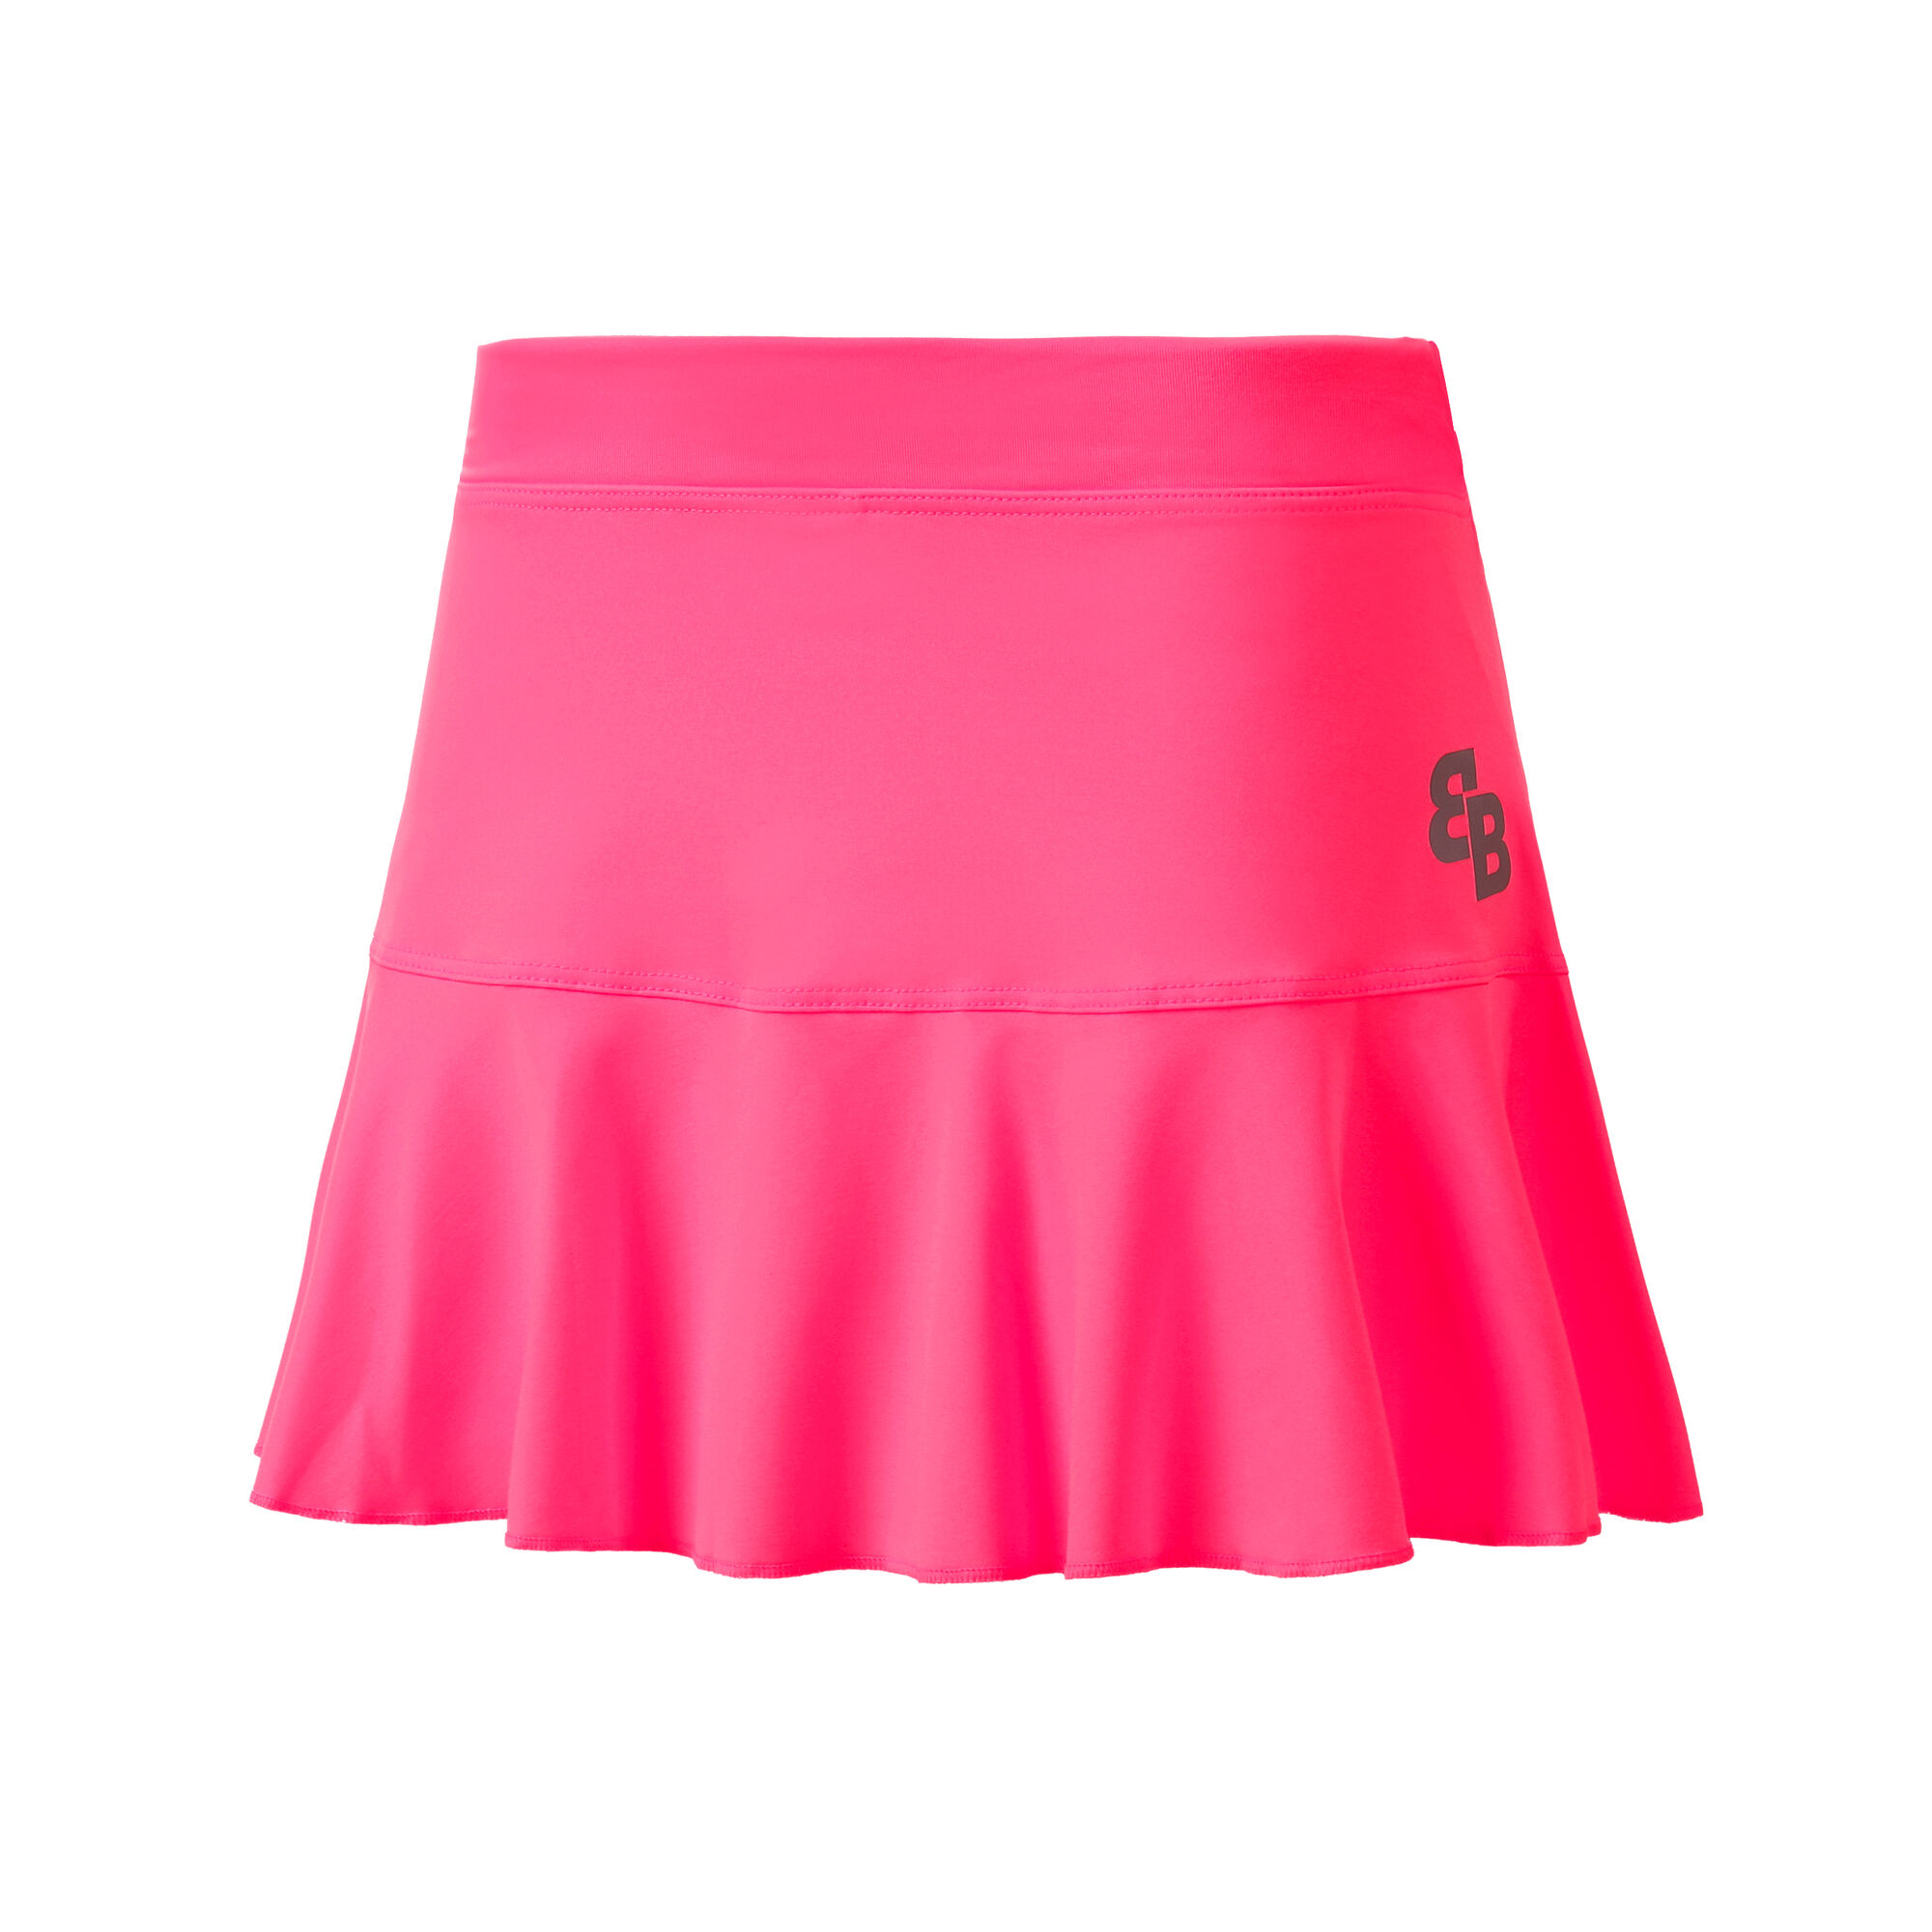 Buy BB by Belen Berbel Basica Skirt Women Pink online | Tennis Point UK